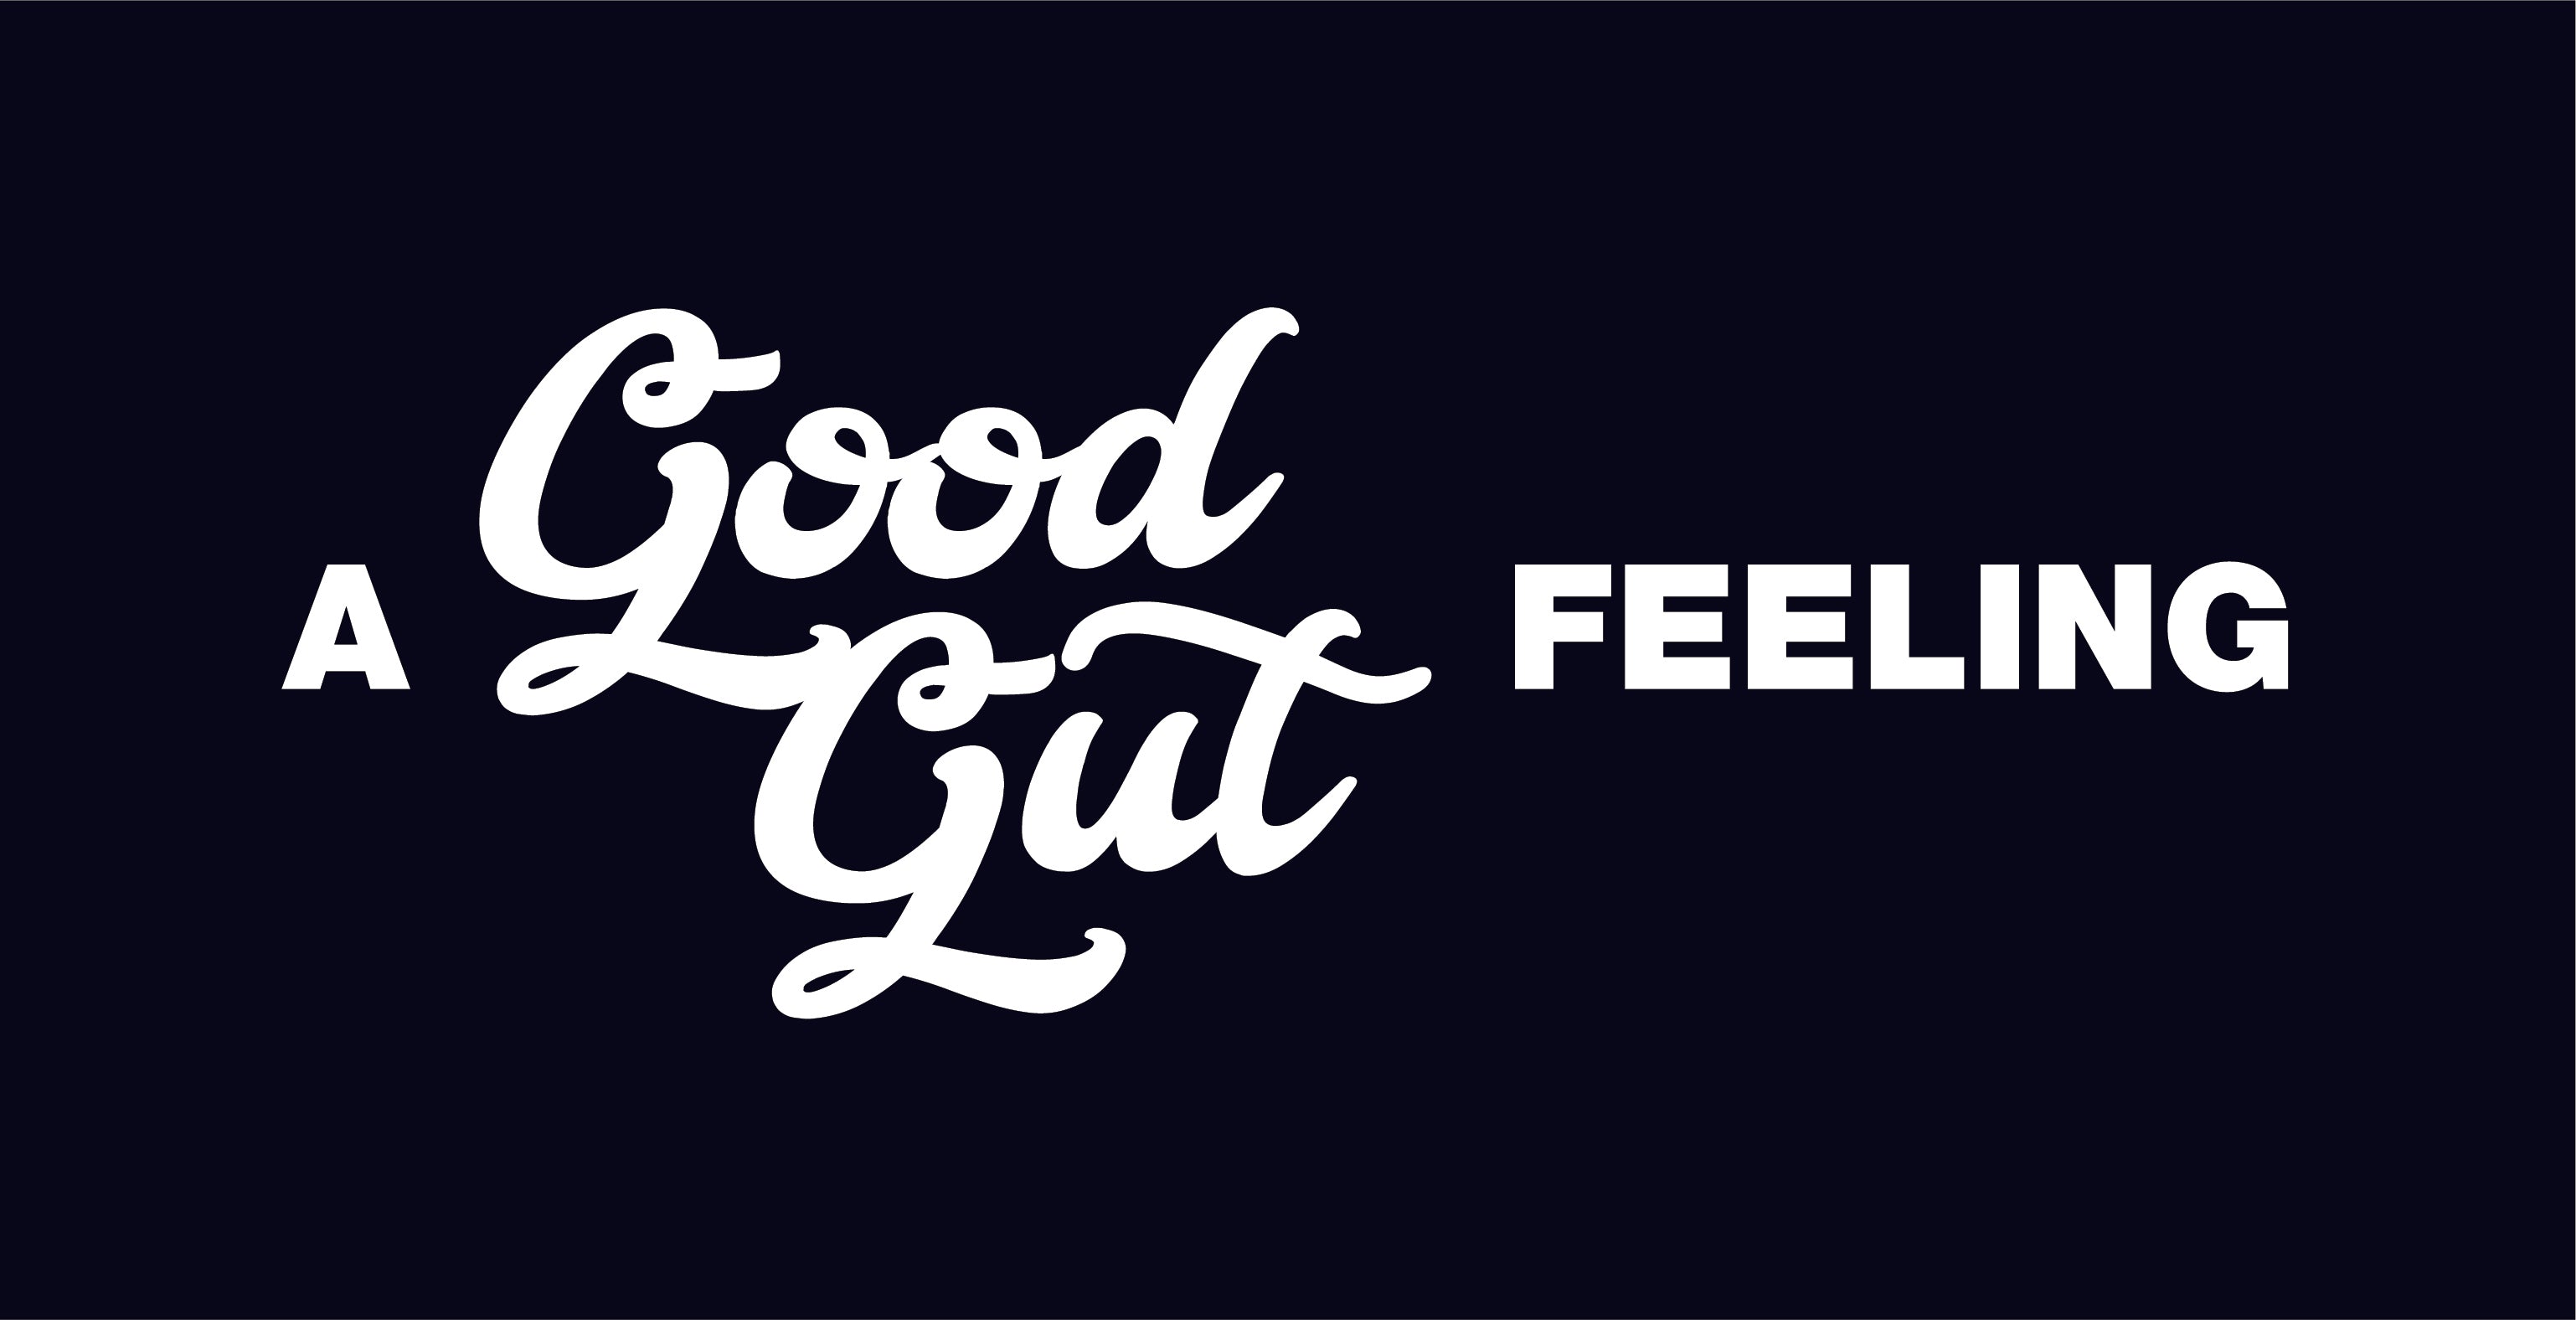 Carlington Booch "Good Gut Feeling" (BLUE FONT ON BACK)